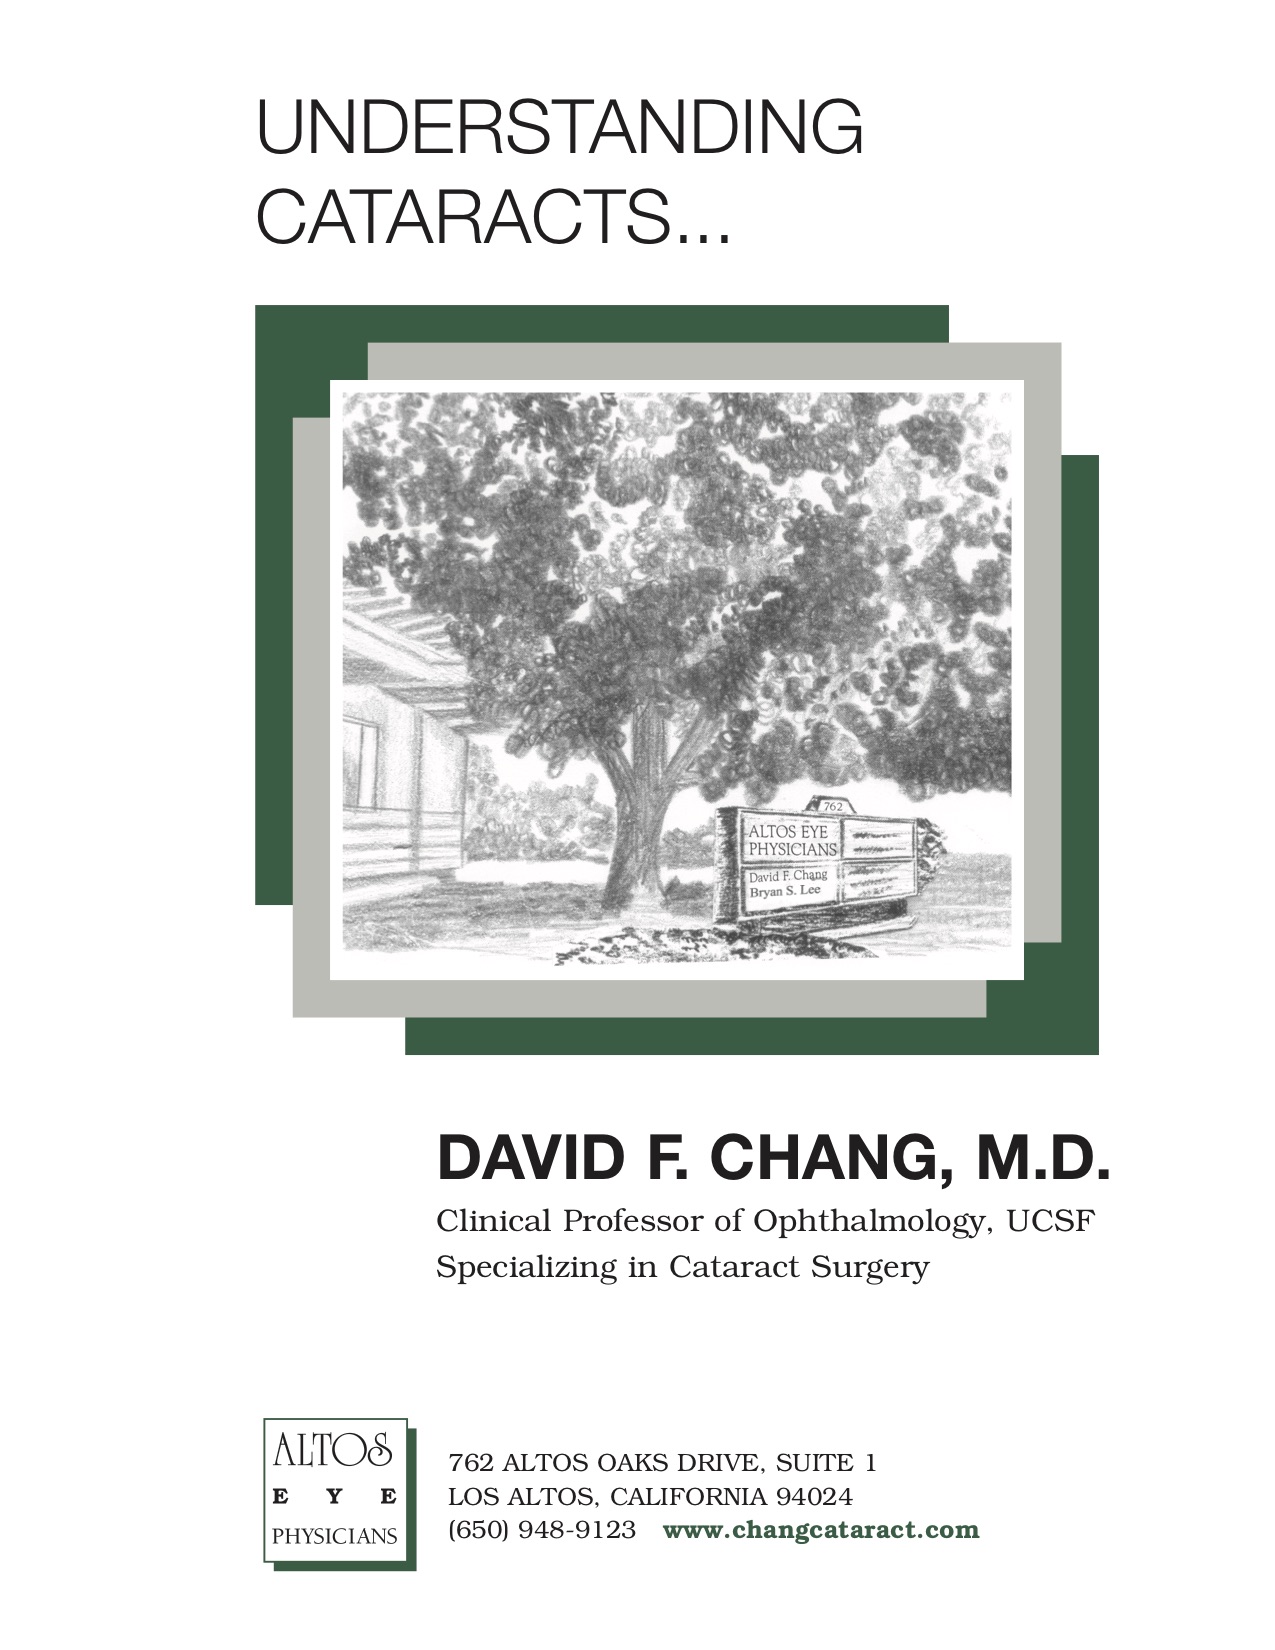 Dr. Chang's Cataract Brochure